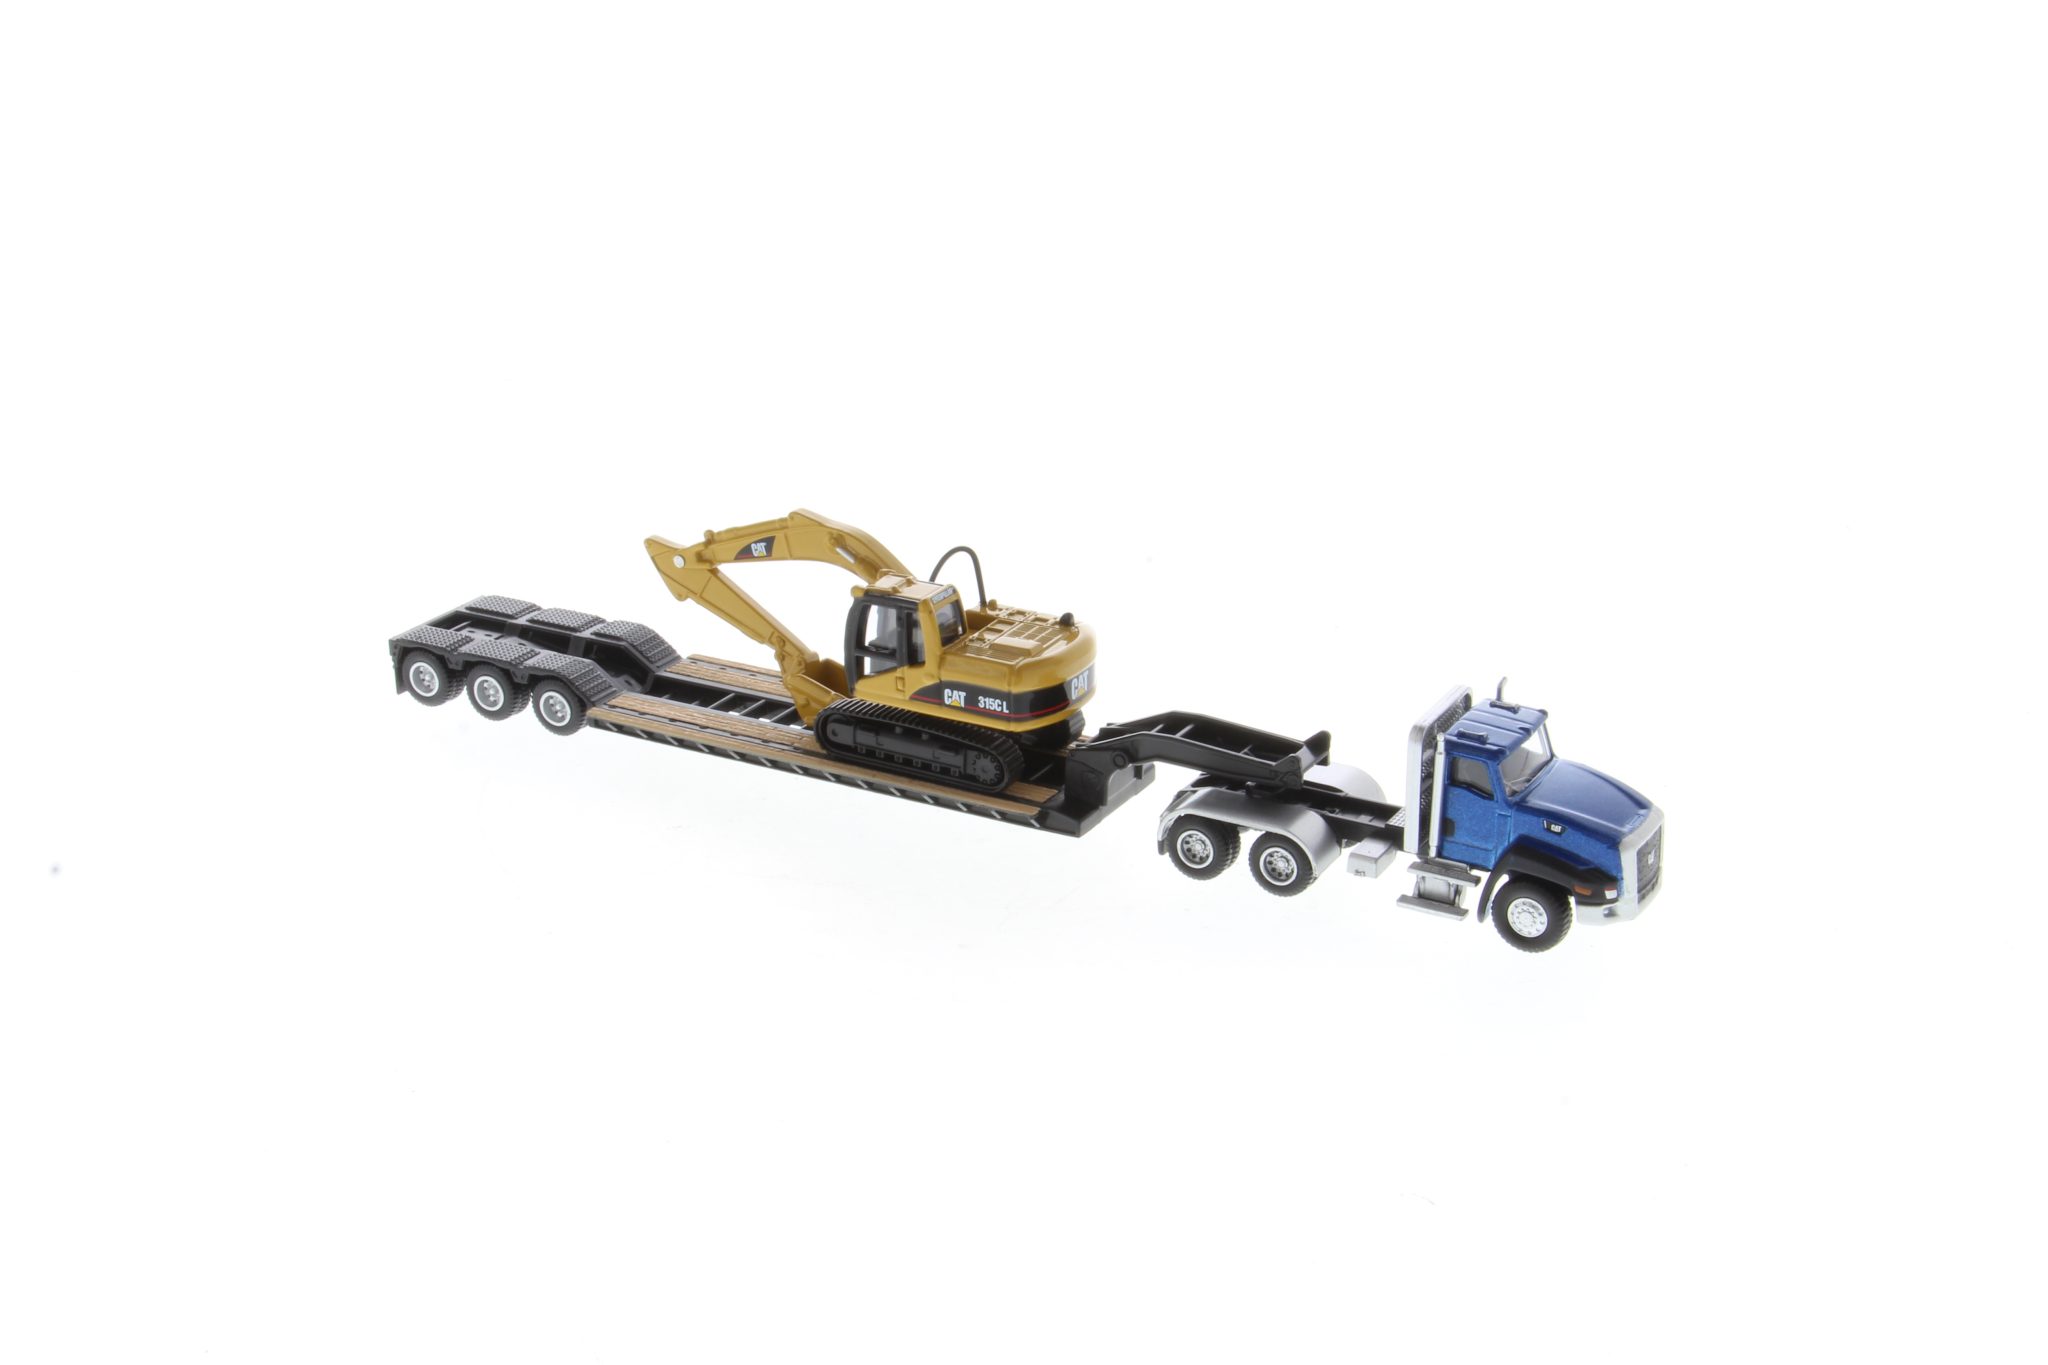 METAL Construction vehicle - crane truck with caterpillar tracks 1